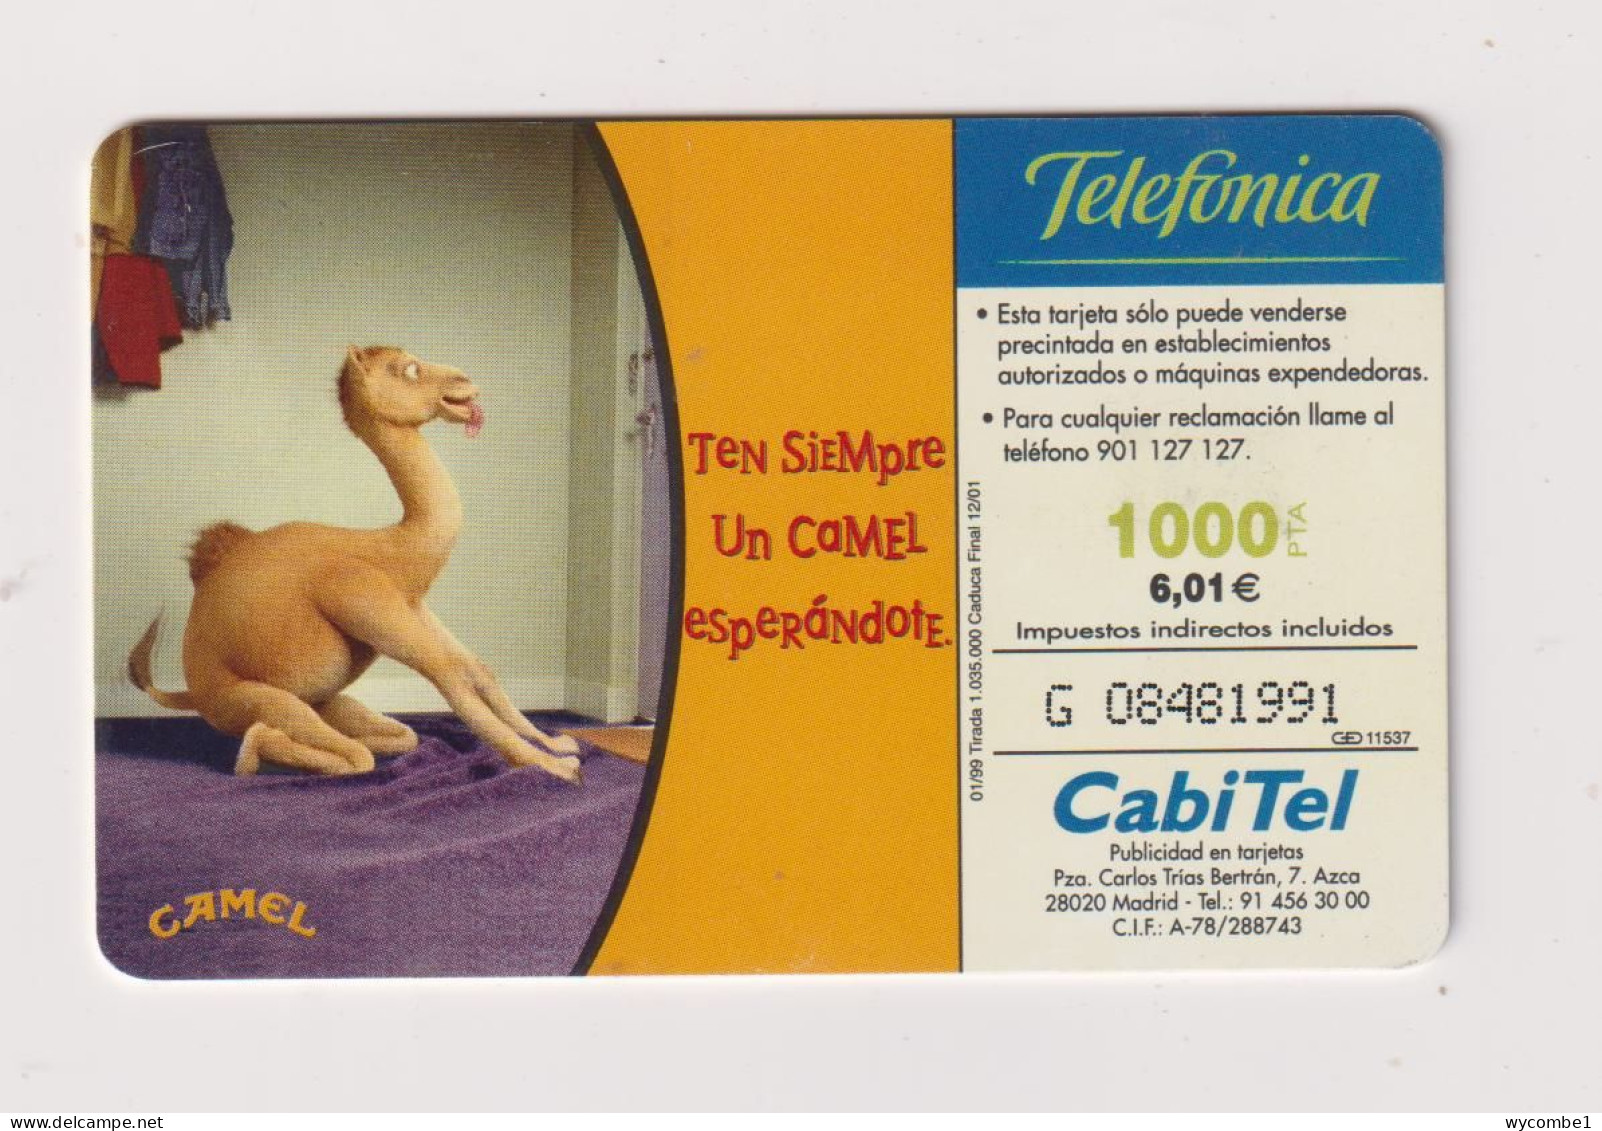 SPAIN - Camel Chip Phonecard - Commemorative Advertisment